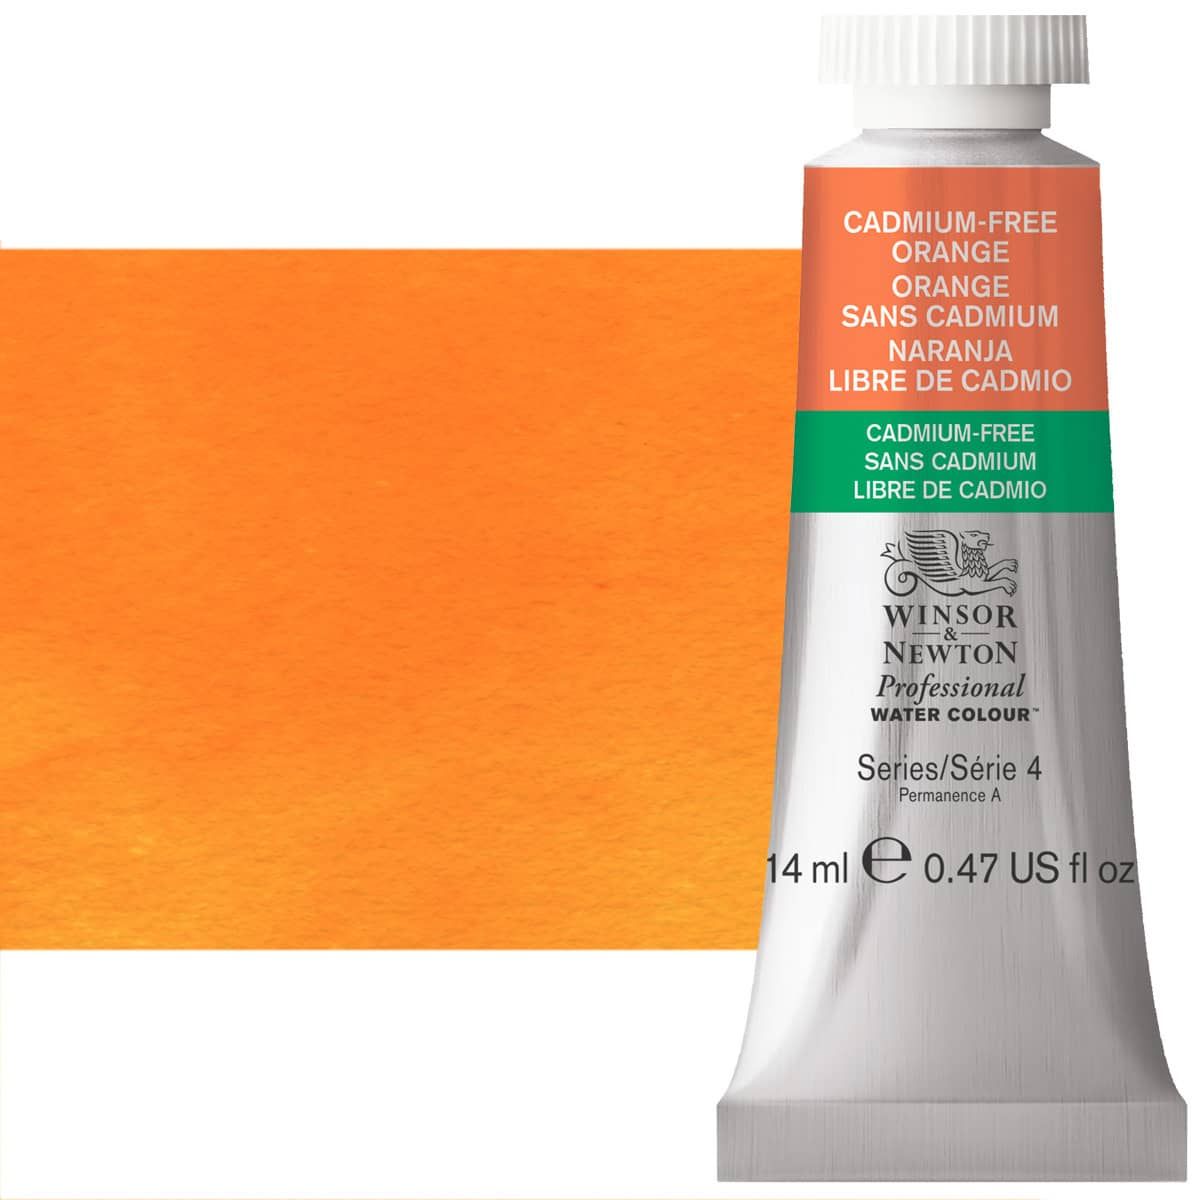 Winsor & Newton Professional Watercolor - Cadmium-Free Orange, 14ml Tube